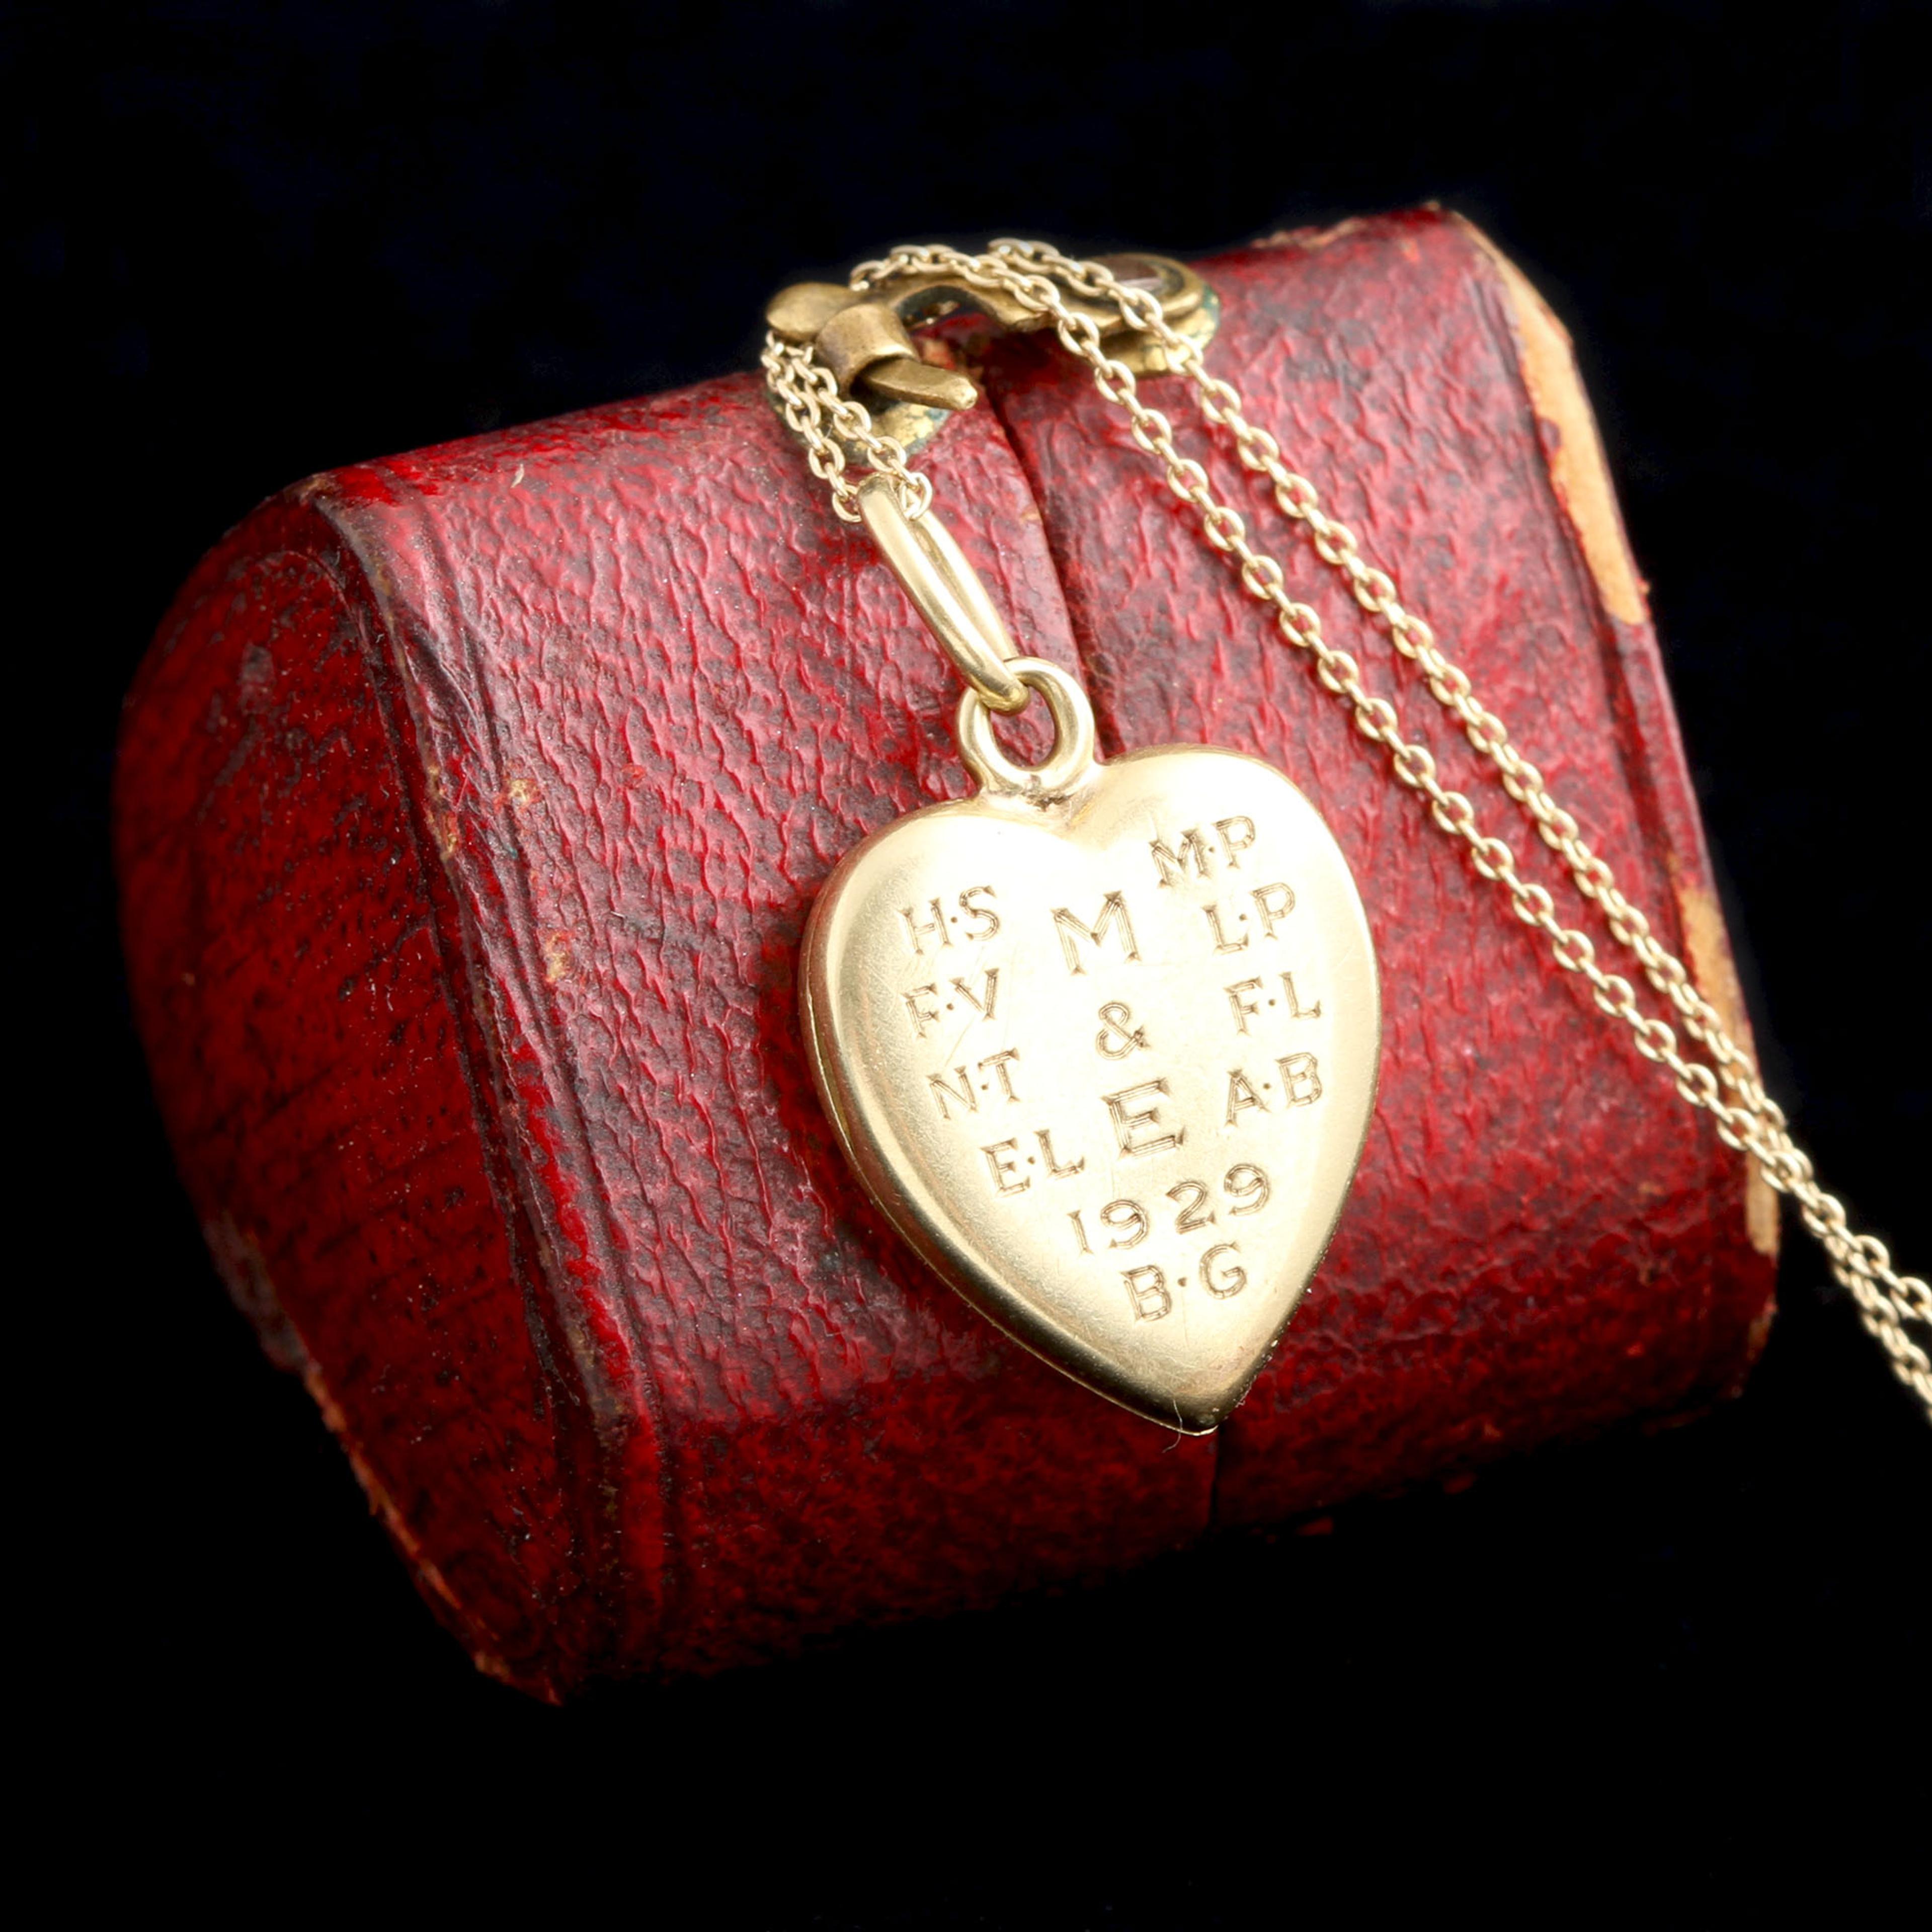 Detail of 1920s M & E Enamel Heart Locket Necklace showing back side engraving